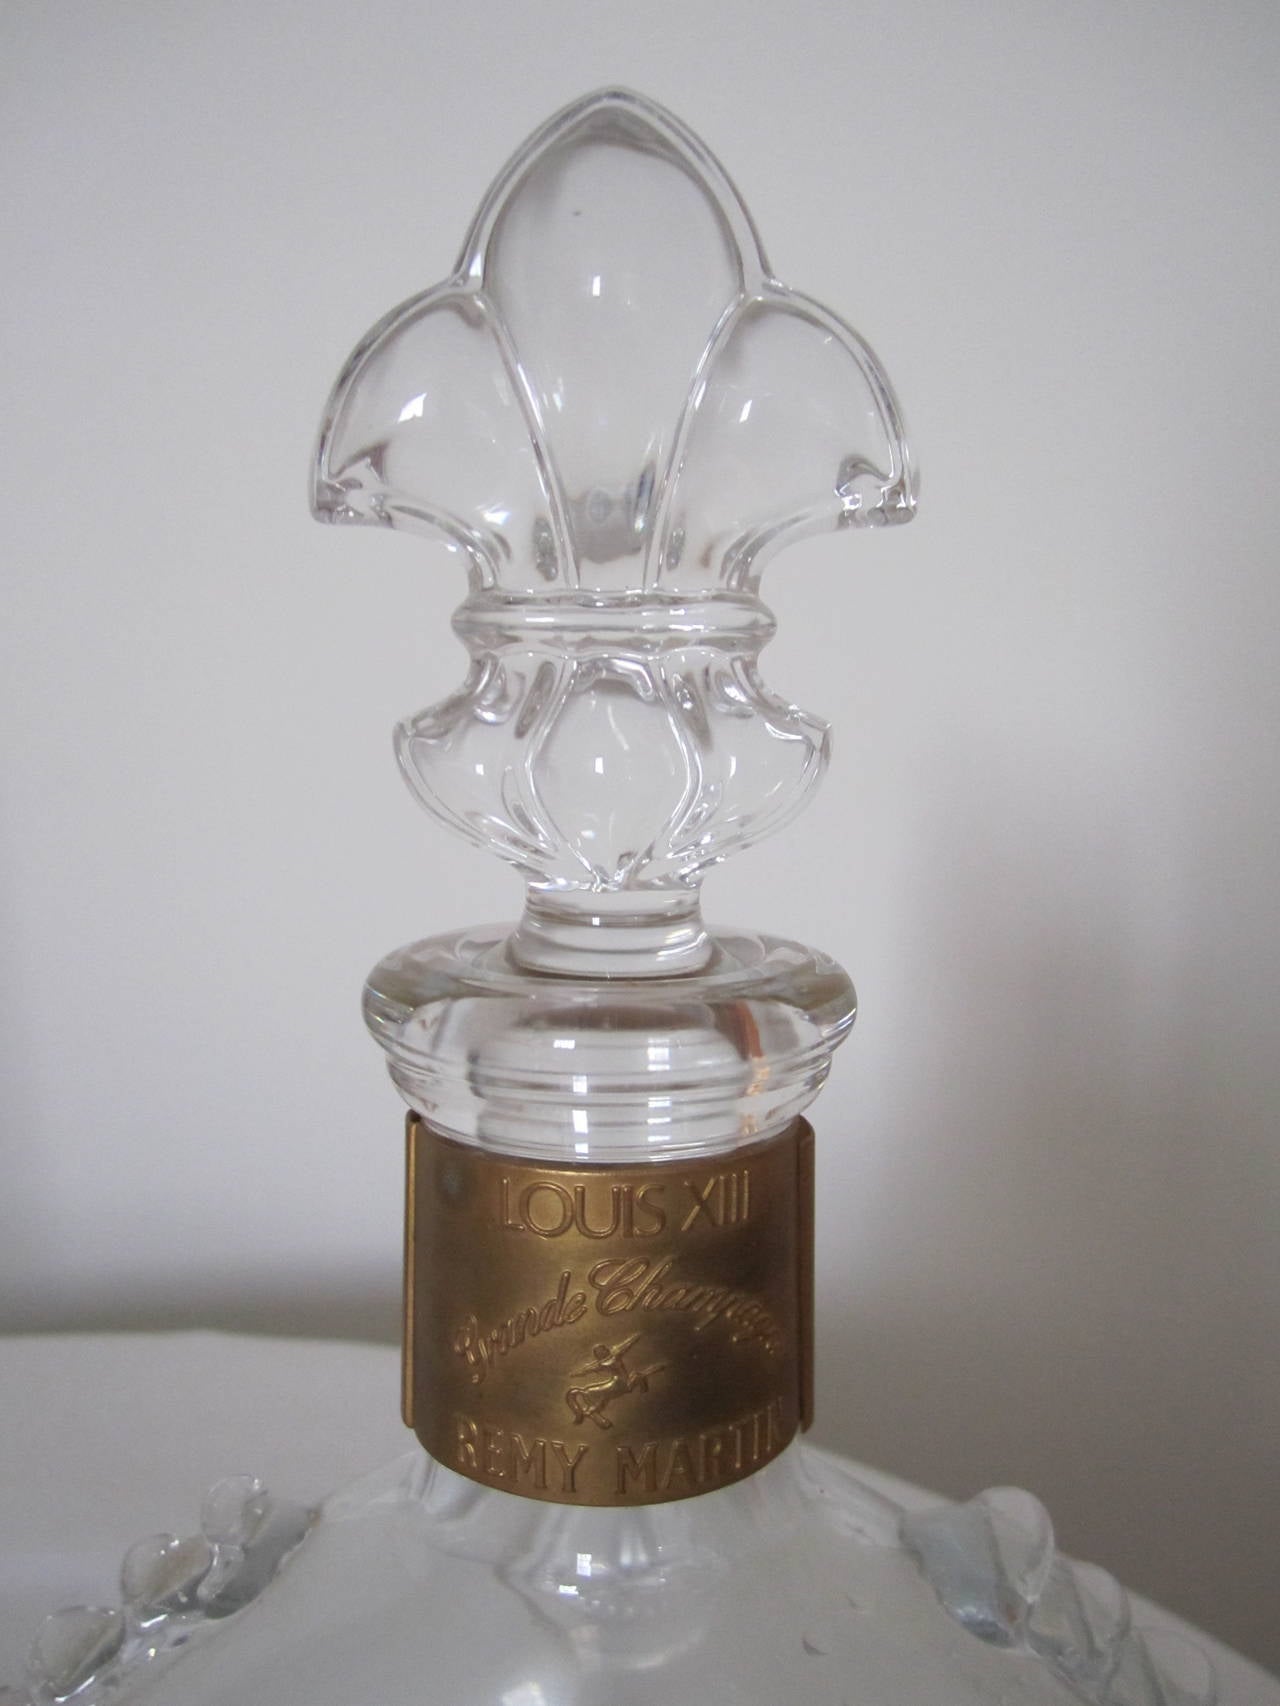 20th Century Vintage Baccarat Crystal Glass Louis XIII Cognac Decanter Set